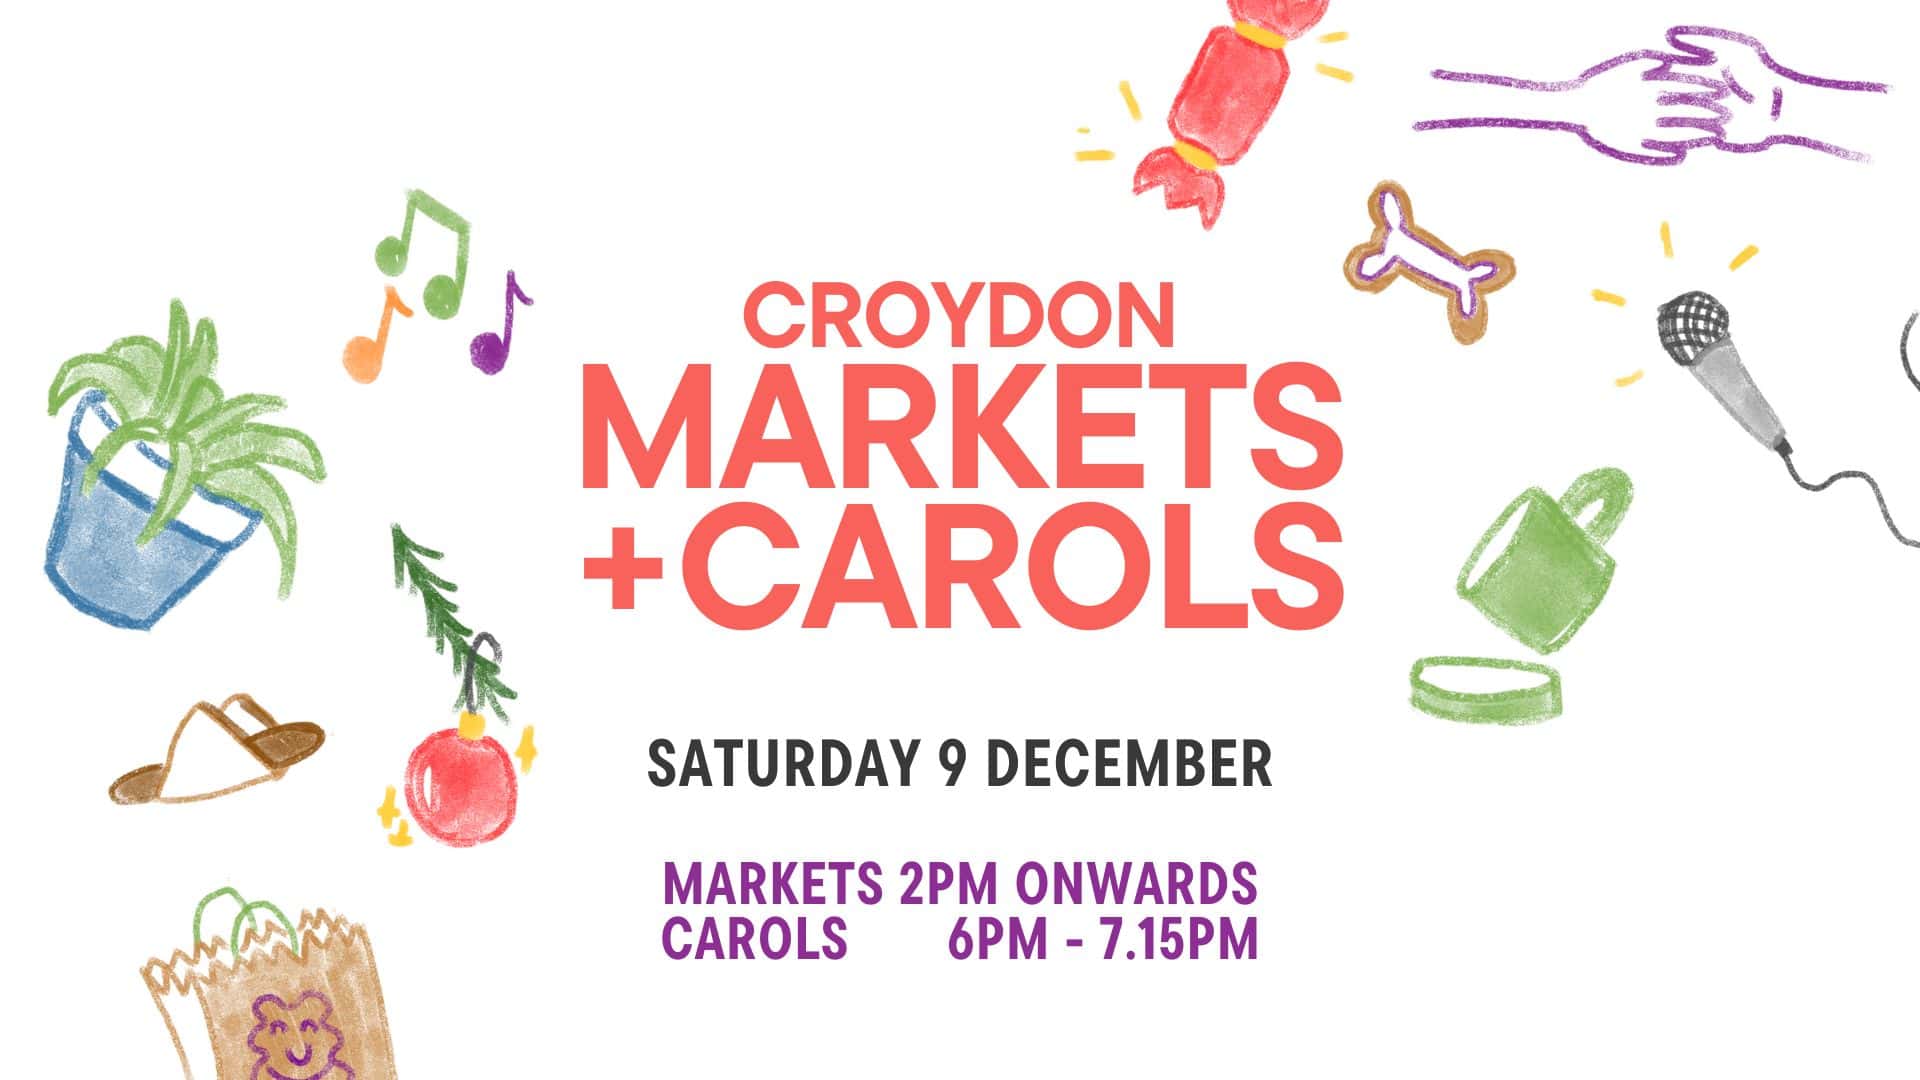 Croydon Markets and Carols 